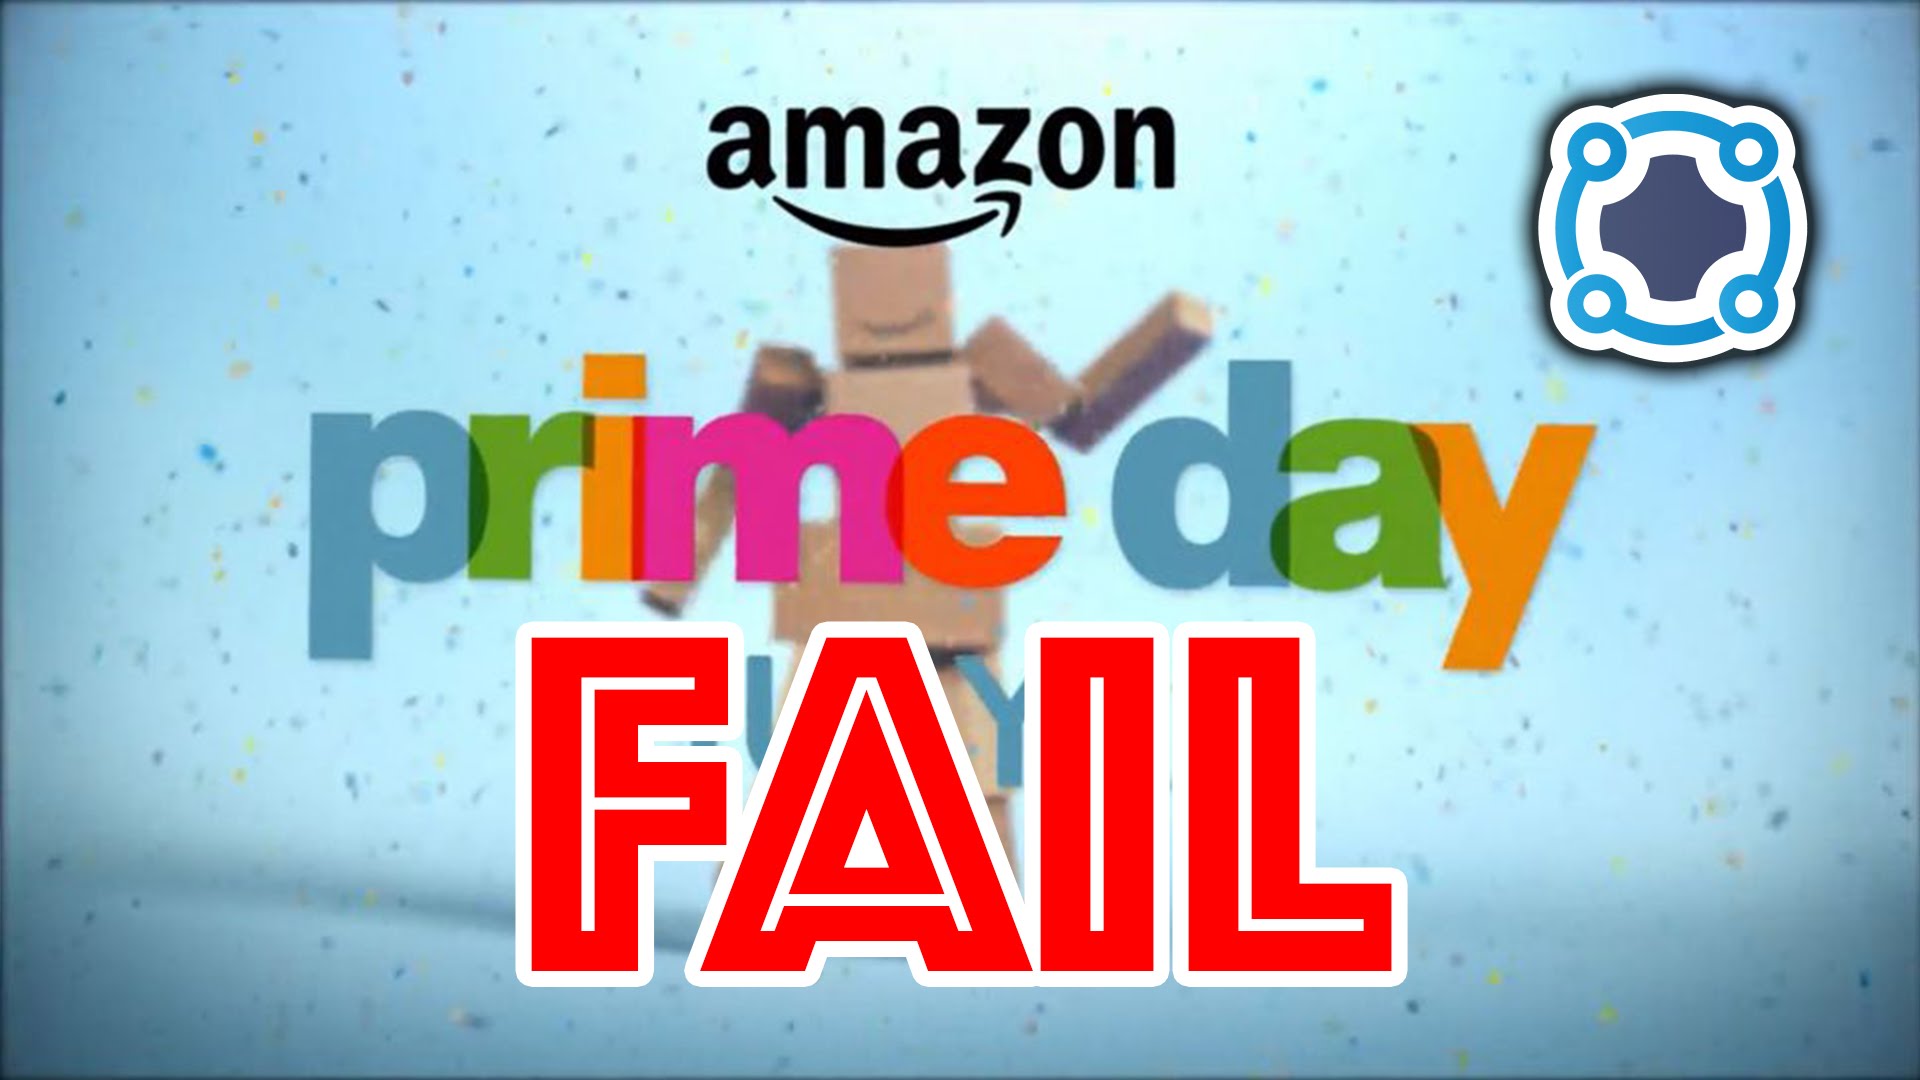 Amazon Prime Day: Success or BIG FAT FAIL?